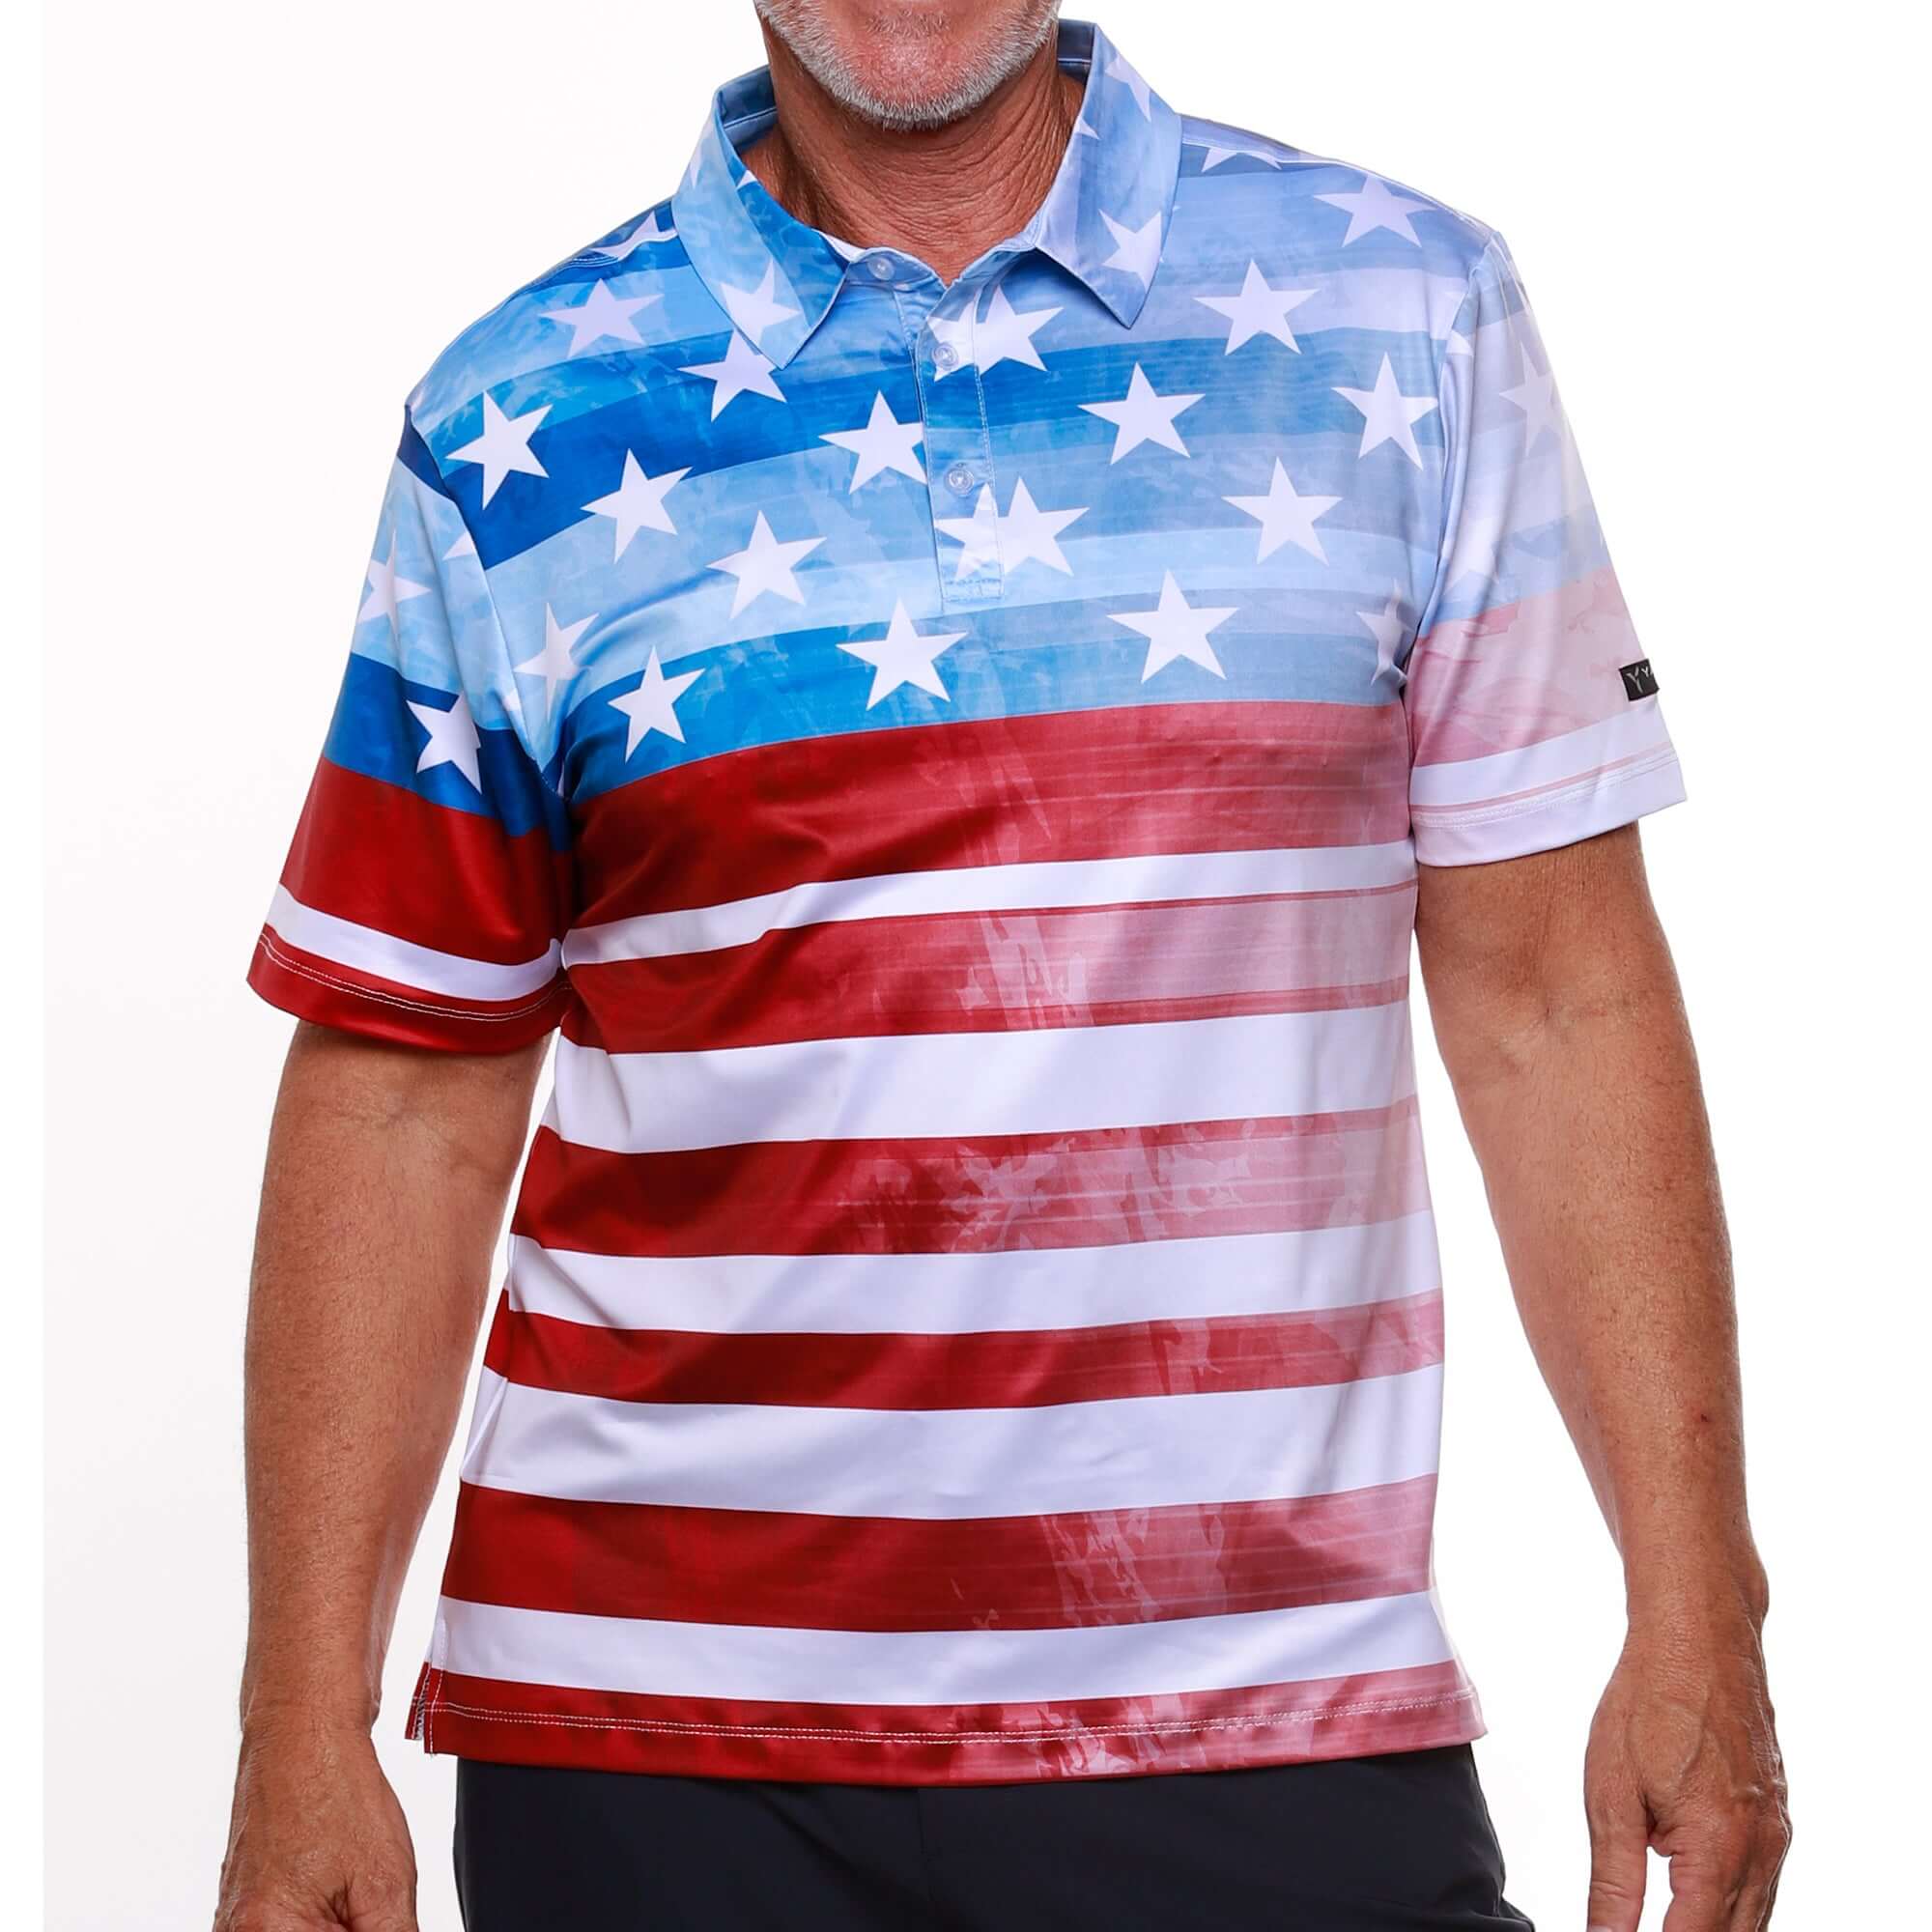 Men's Stars and Stripes Performance Golf Polo – The Flag Shirt